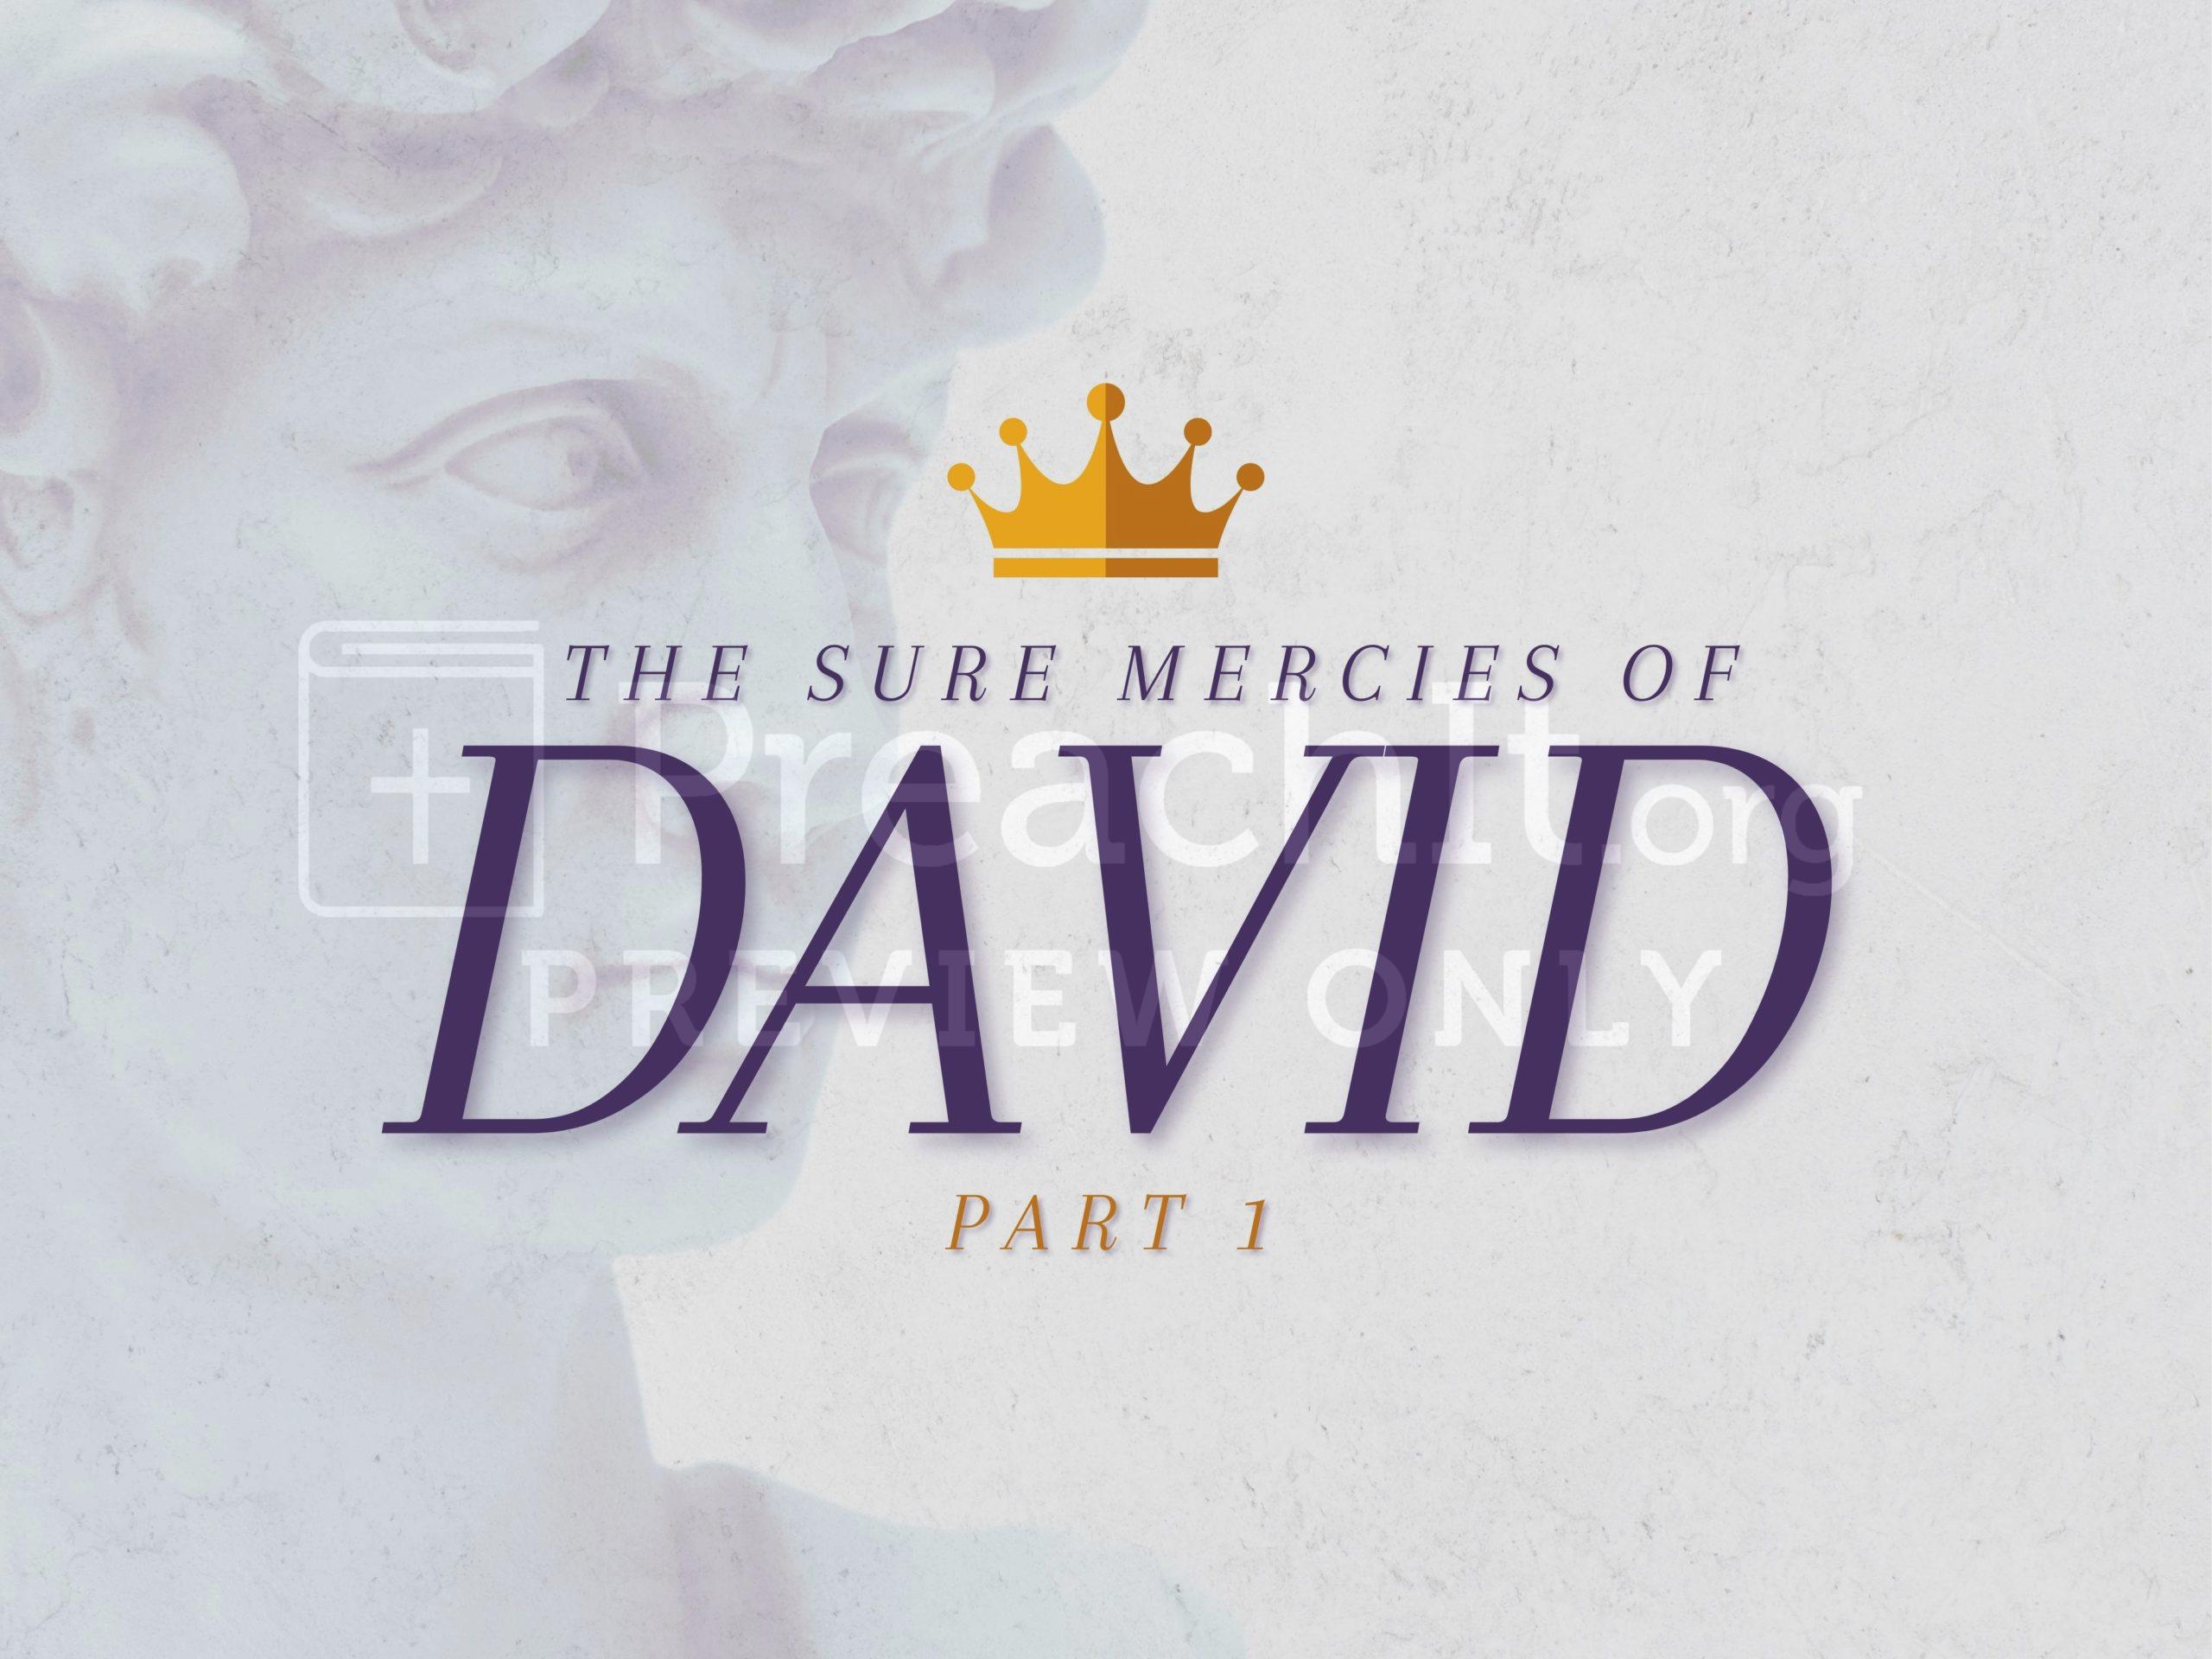 Part 1: The Sure Mercies Of David